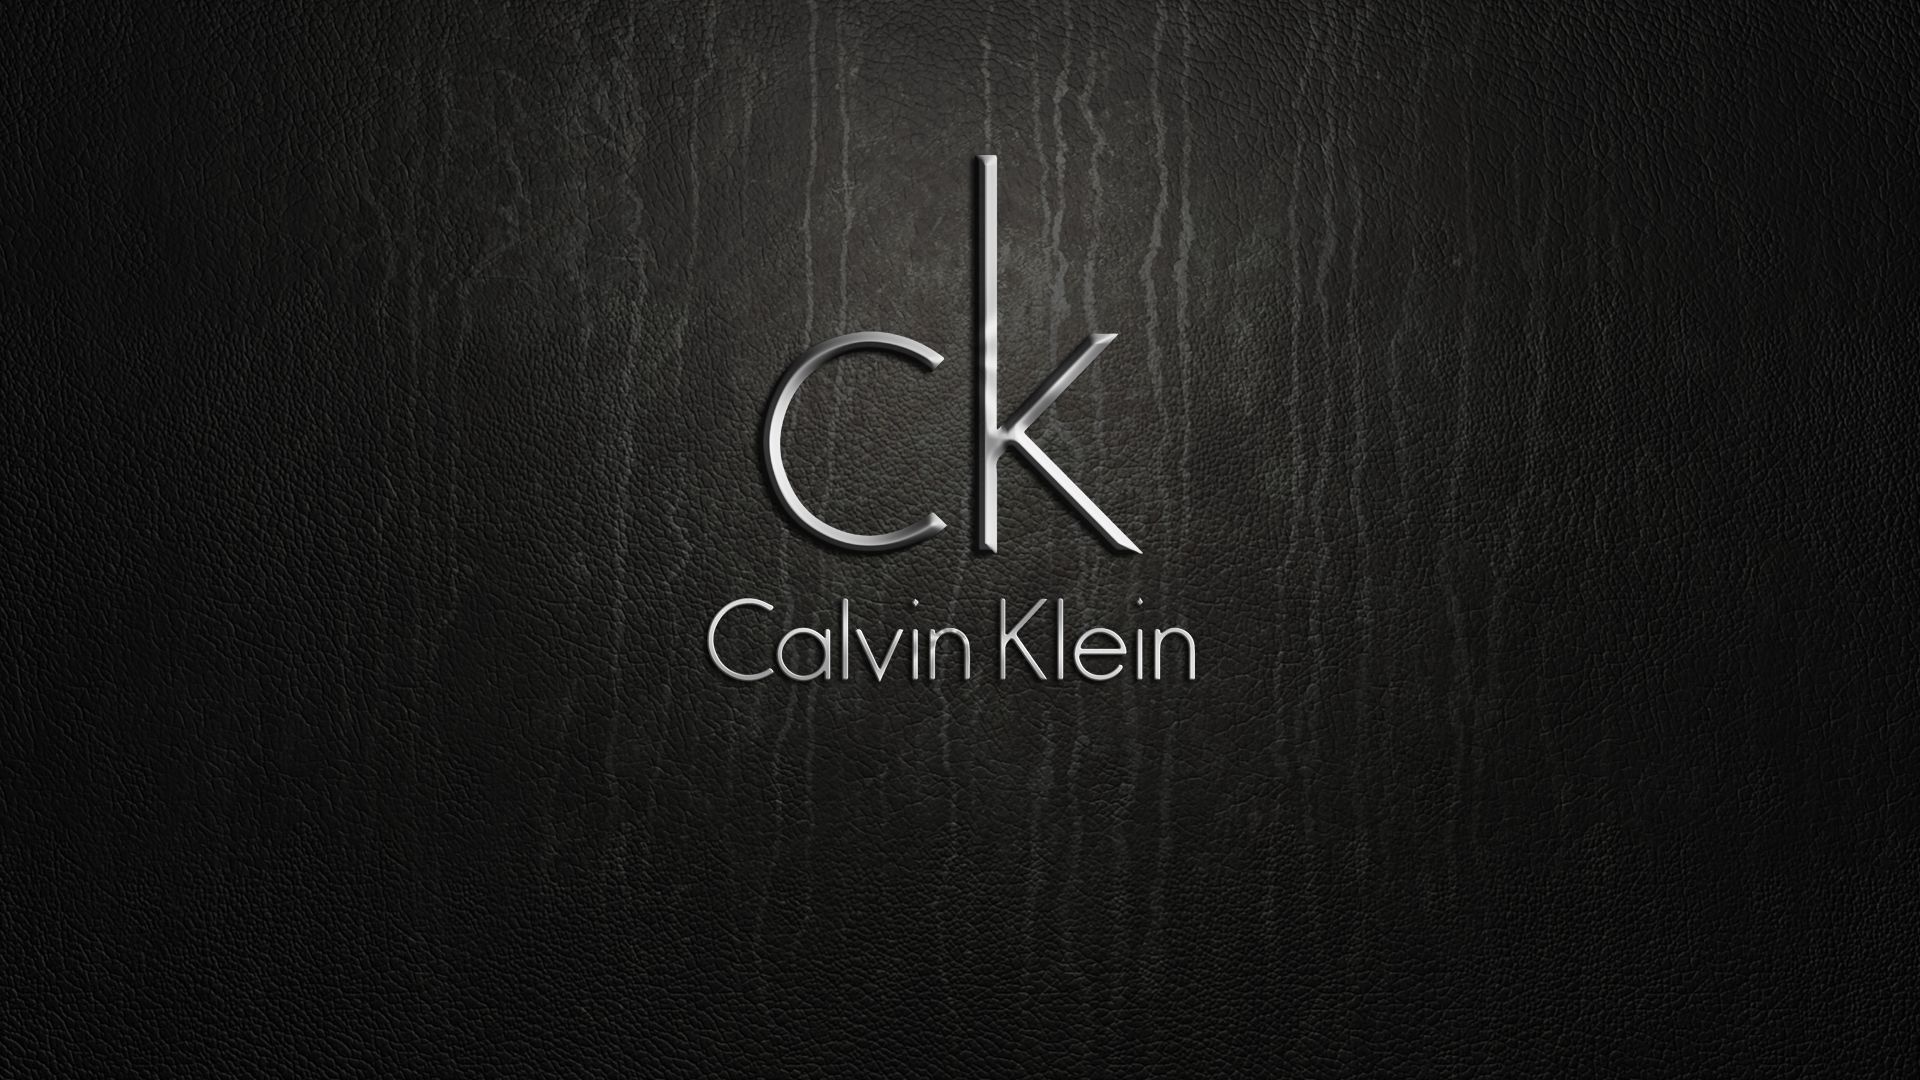 Calvin Klein CK Vintage Logo on Peeling Barn Wood Paint Fleece Blanket by  Design Turnpike - Instaprints